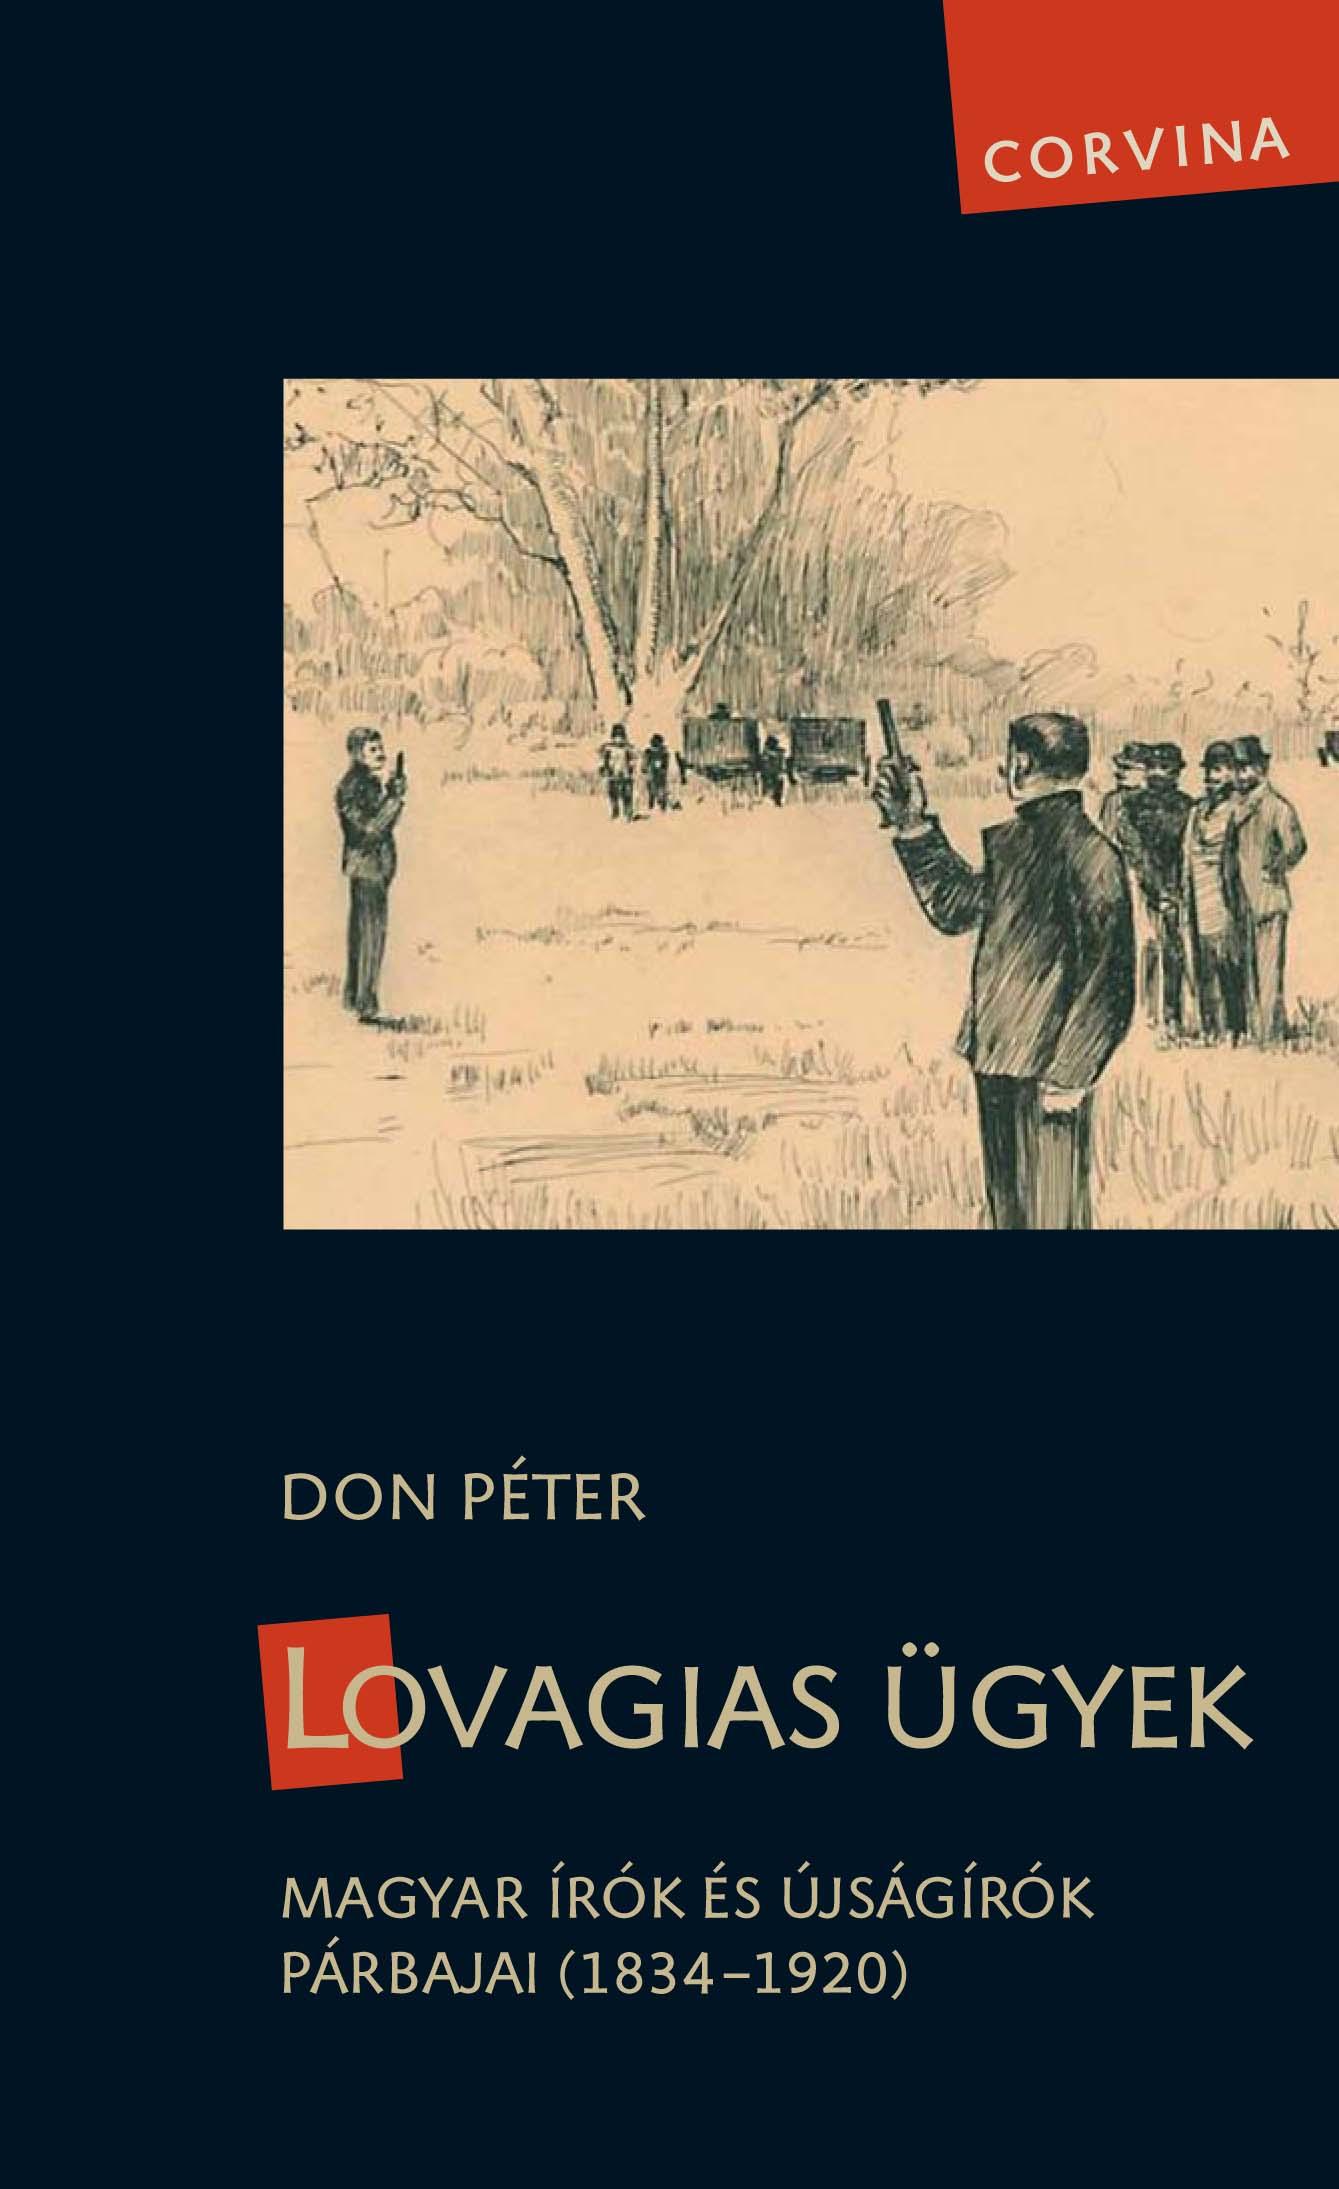 Don Péter - Lovagias ügyek - Magyar írók és újságírók párbajai (1834-1920)